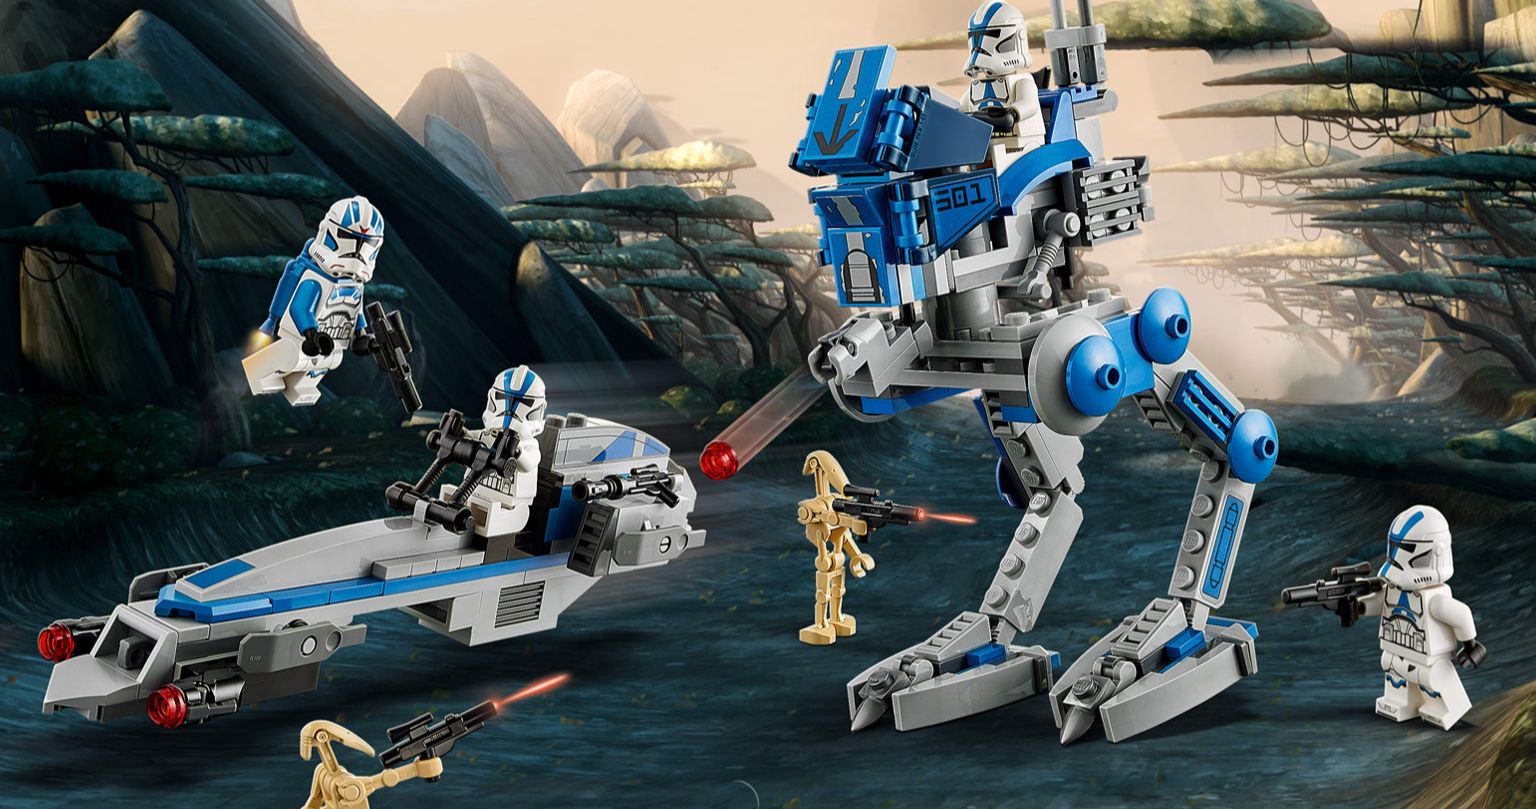 Surprise 501st Legion Clone Trooper Star Wars Lego Set Unveiled